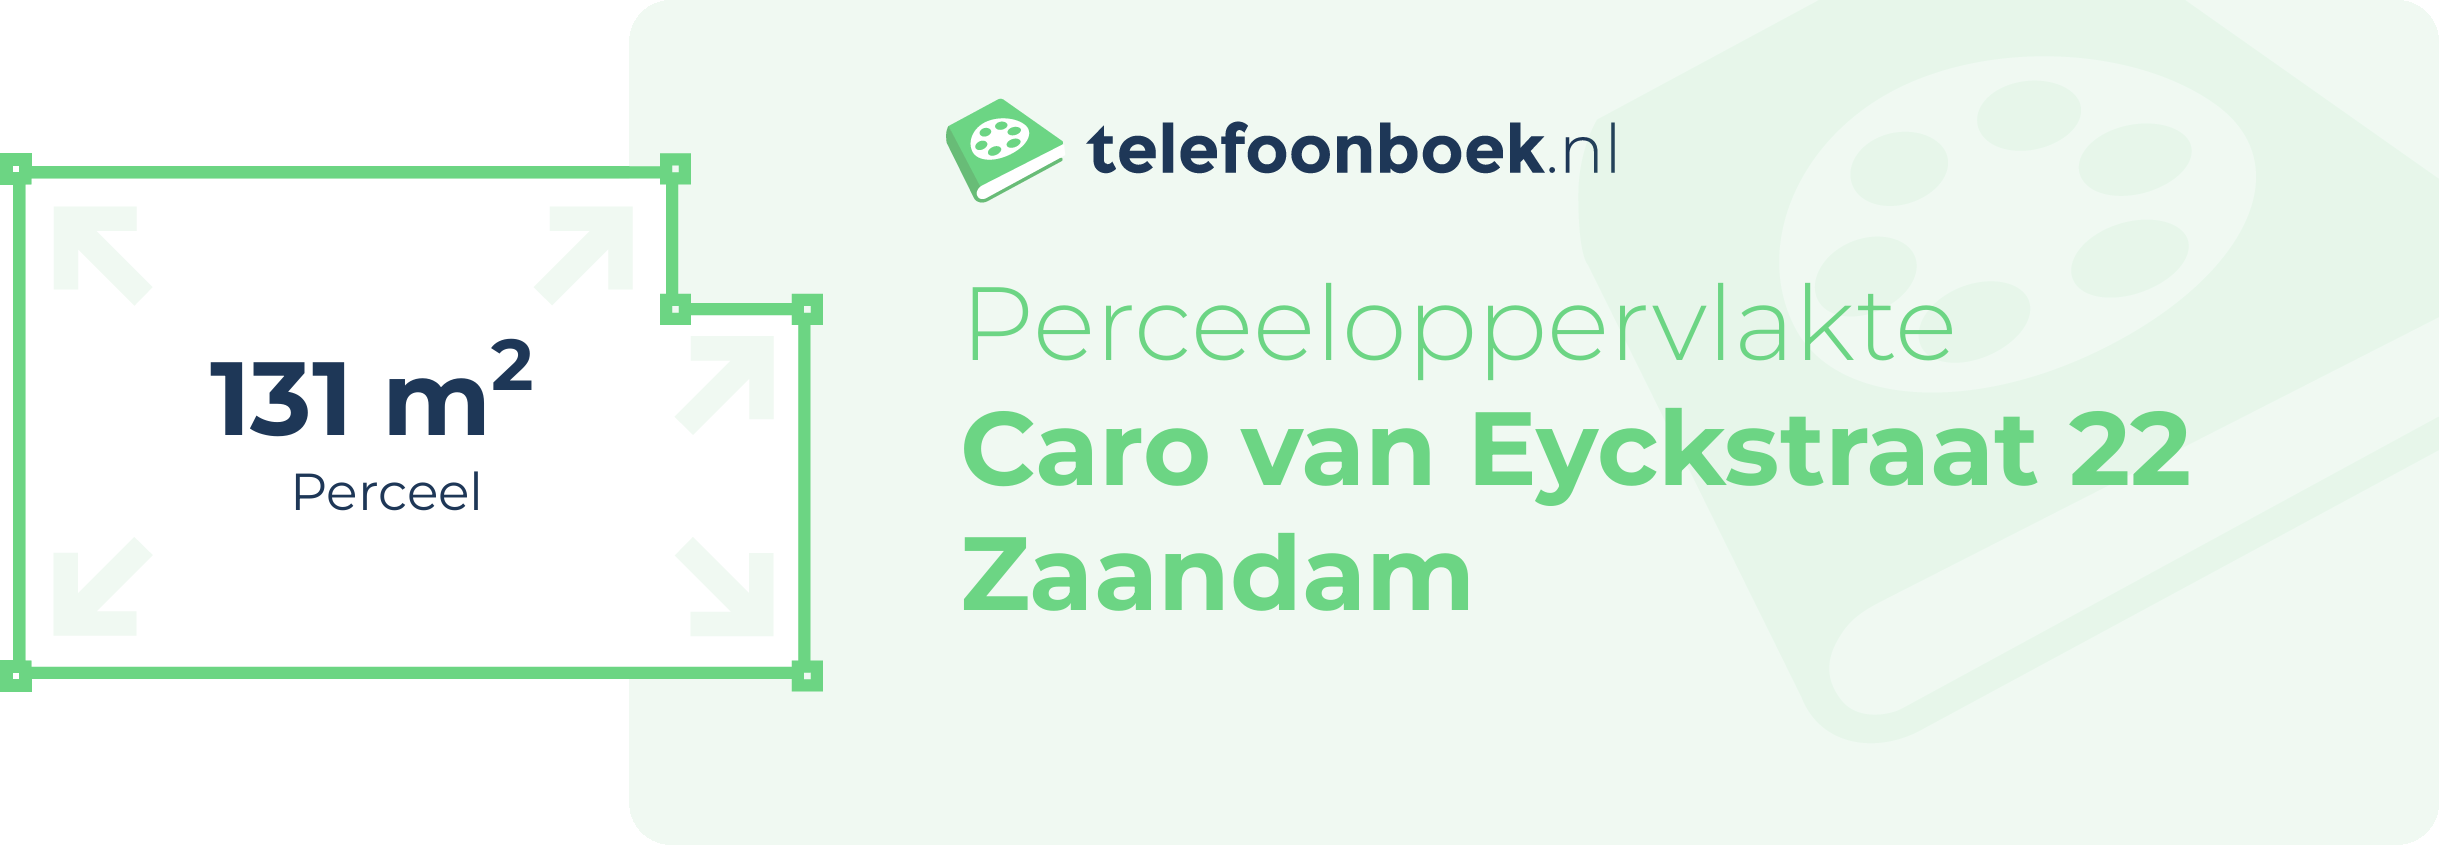 Perceeloppervlakte Caro Van Eyckstraat 22 Zaandam